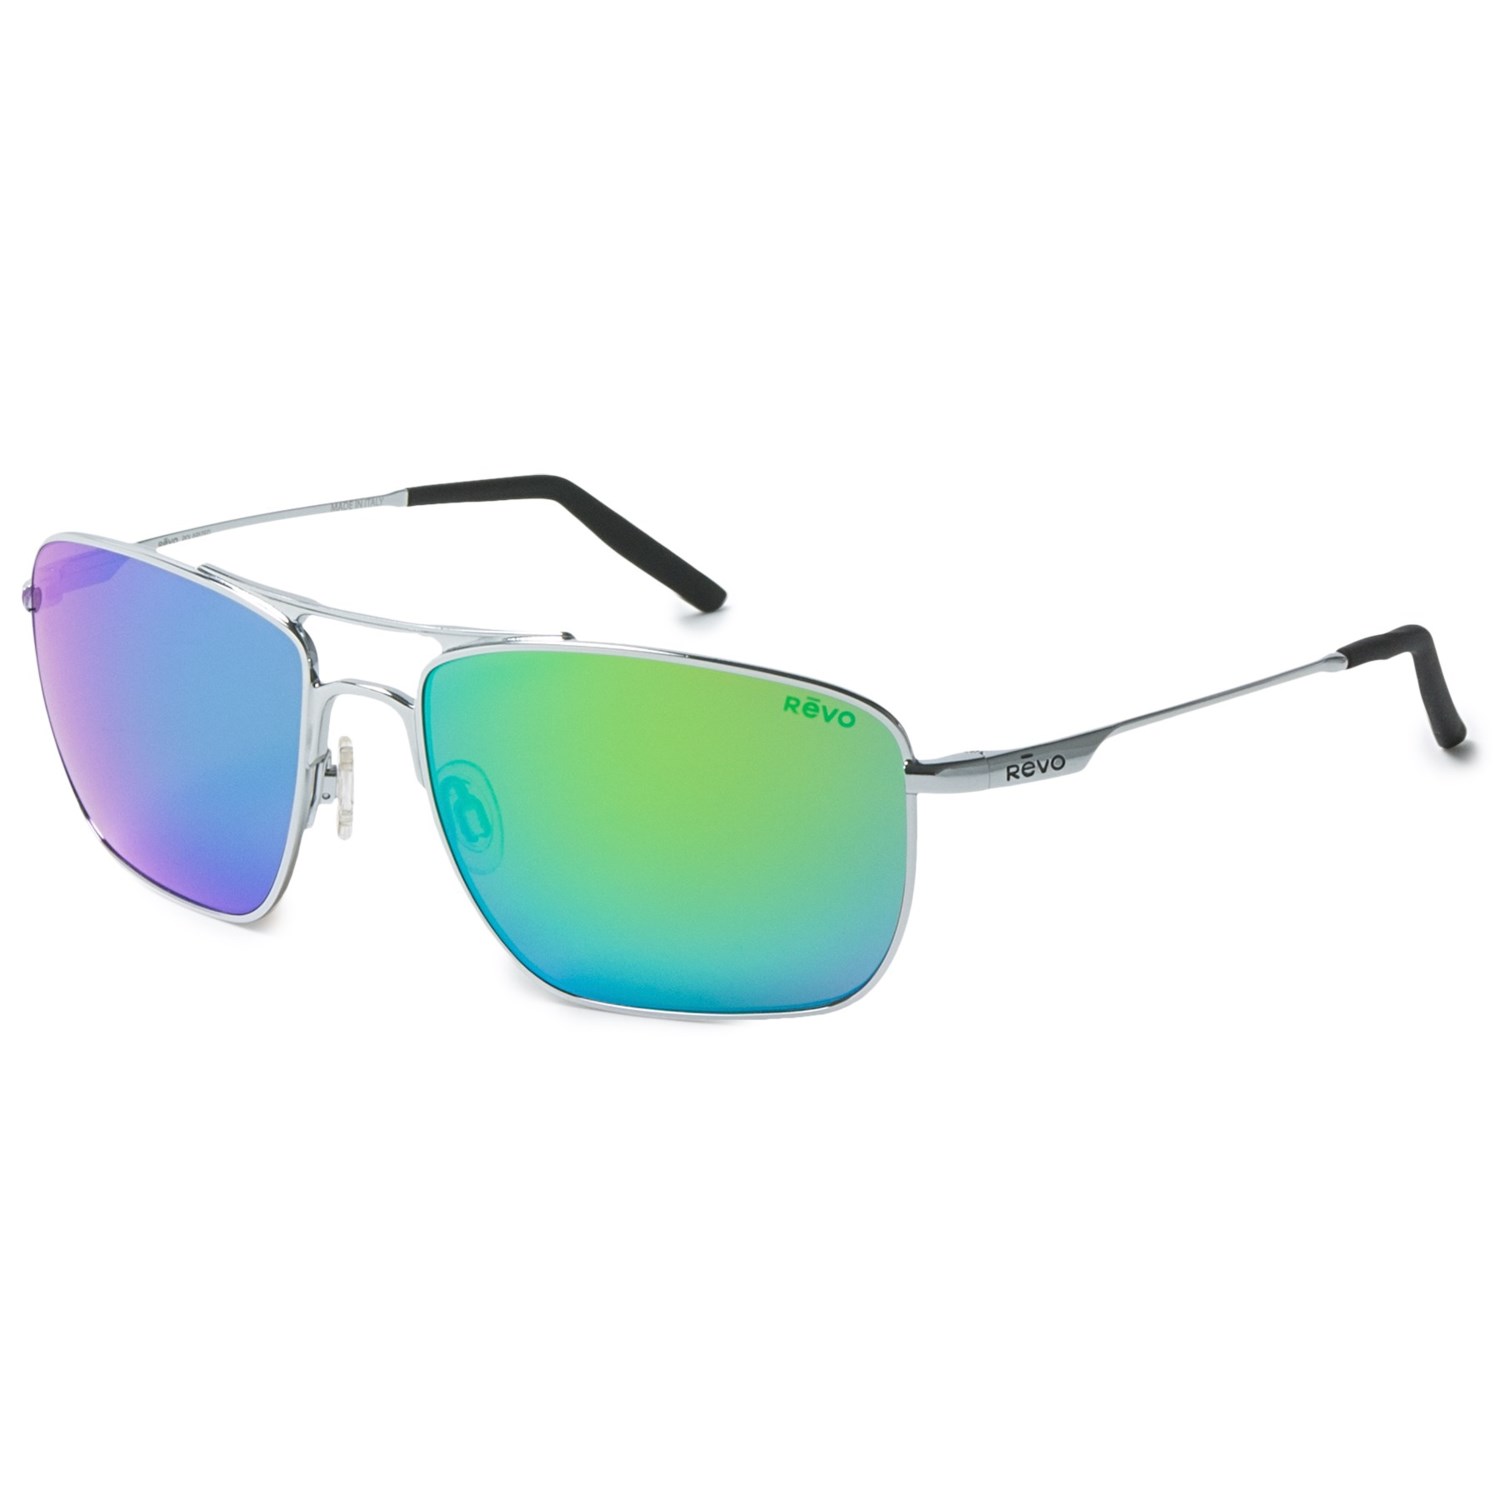 Revo Groundspeed Navigator Sunglasses – Polarized